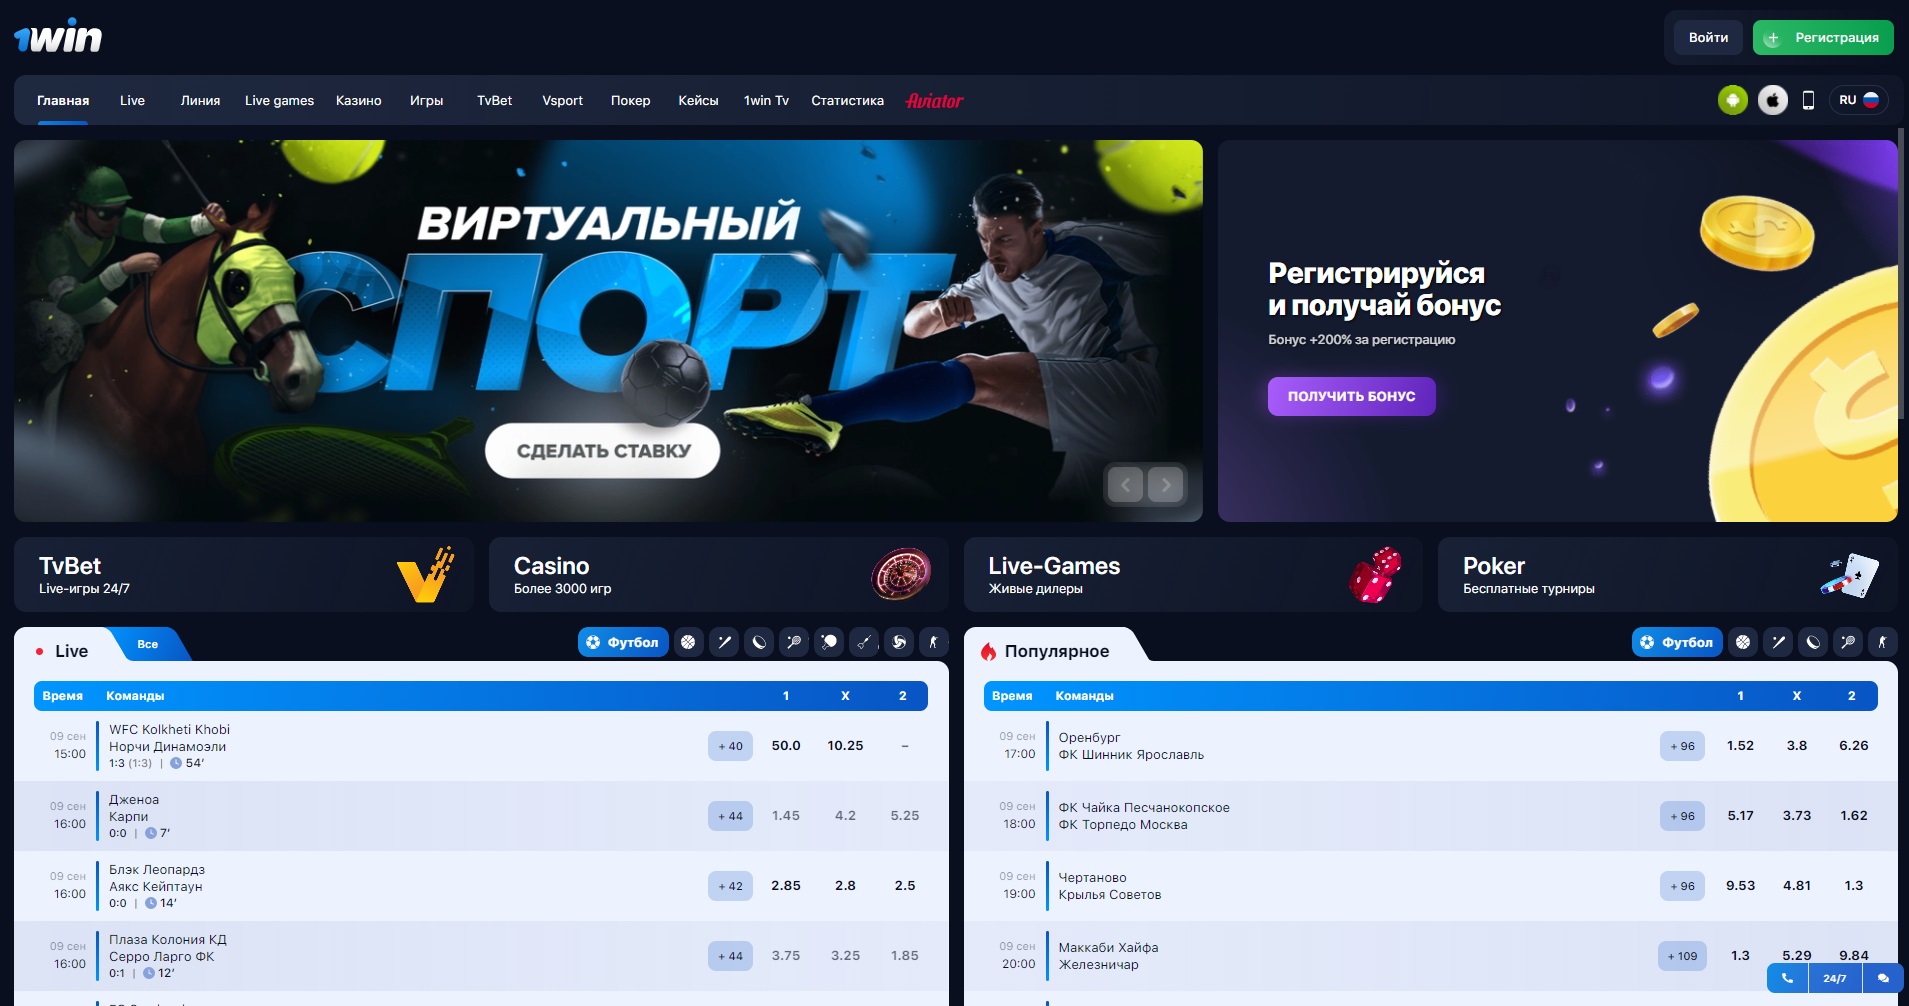 WIN - Официальный сайт букмекерской конторы 1ВИН бонусы.